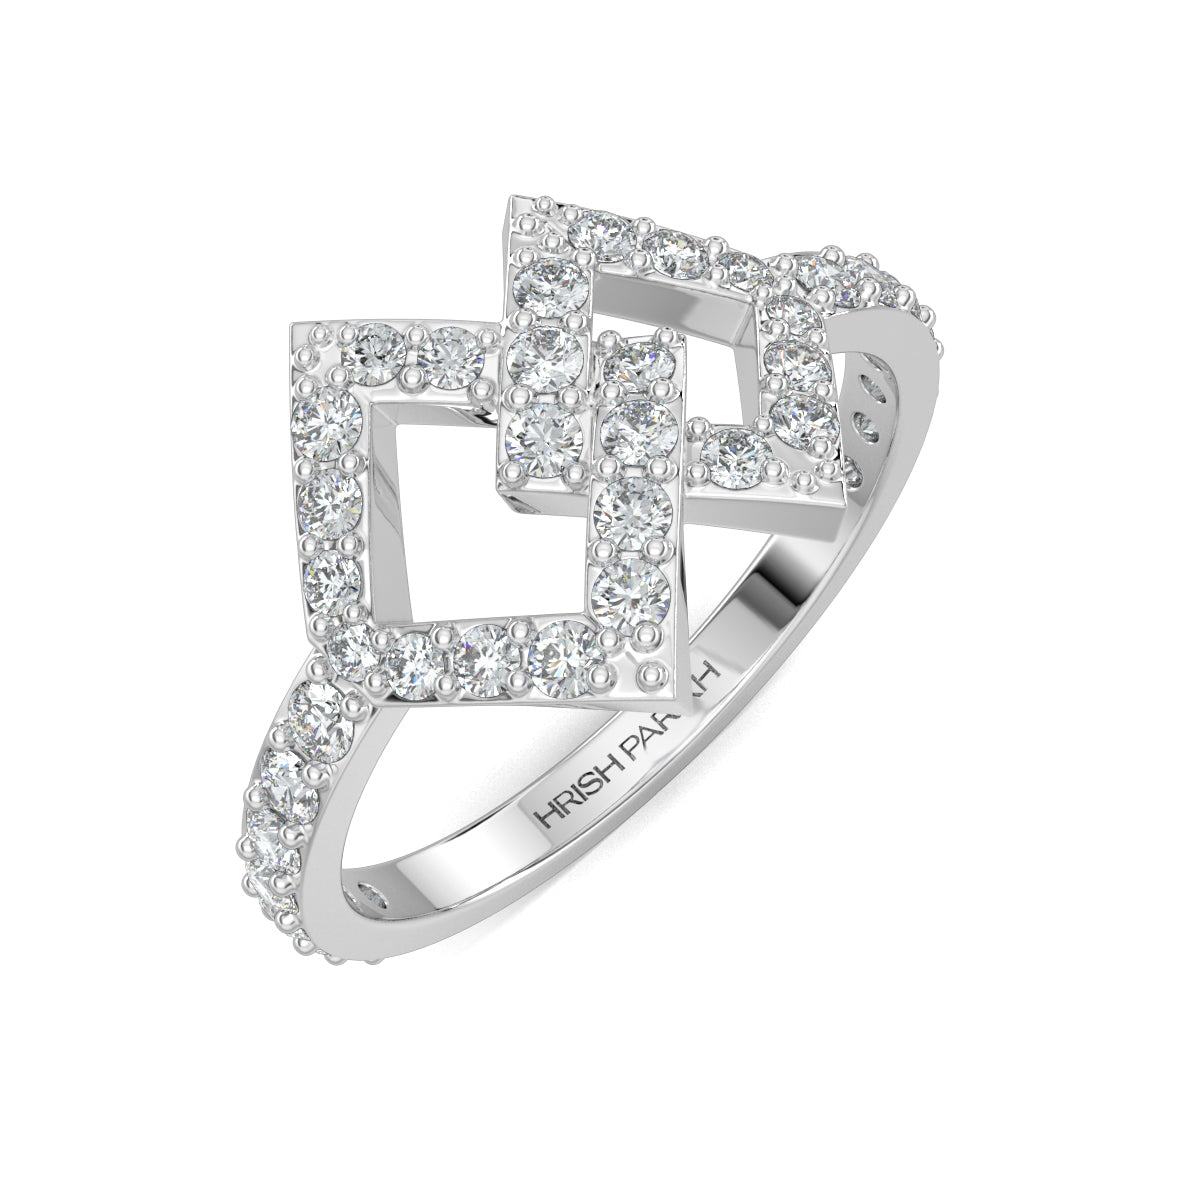 White Gold, Diamond Ring, Natural diamond ring, Lab-grown diamond ring, intertwined diamond design, round diamond accents, unity symbol ring, elegant diamond band.